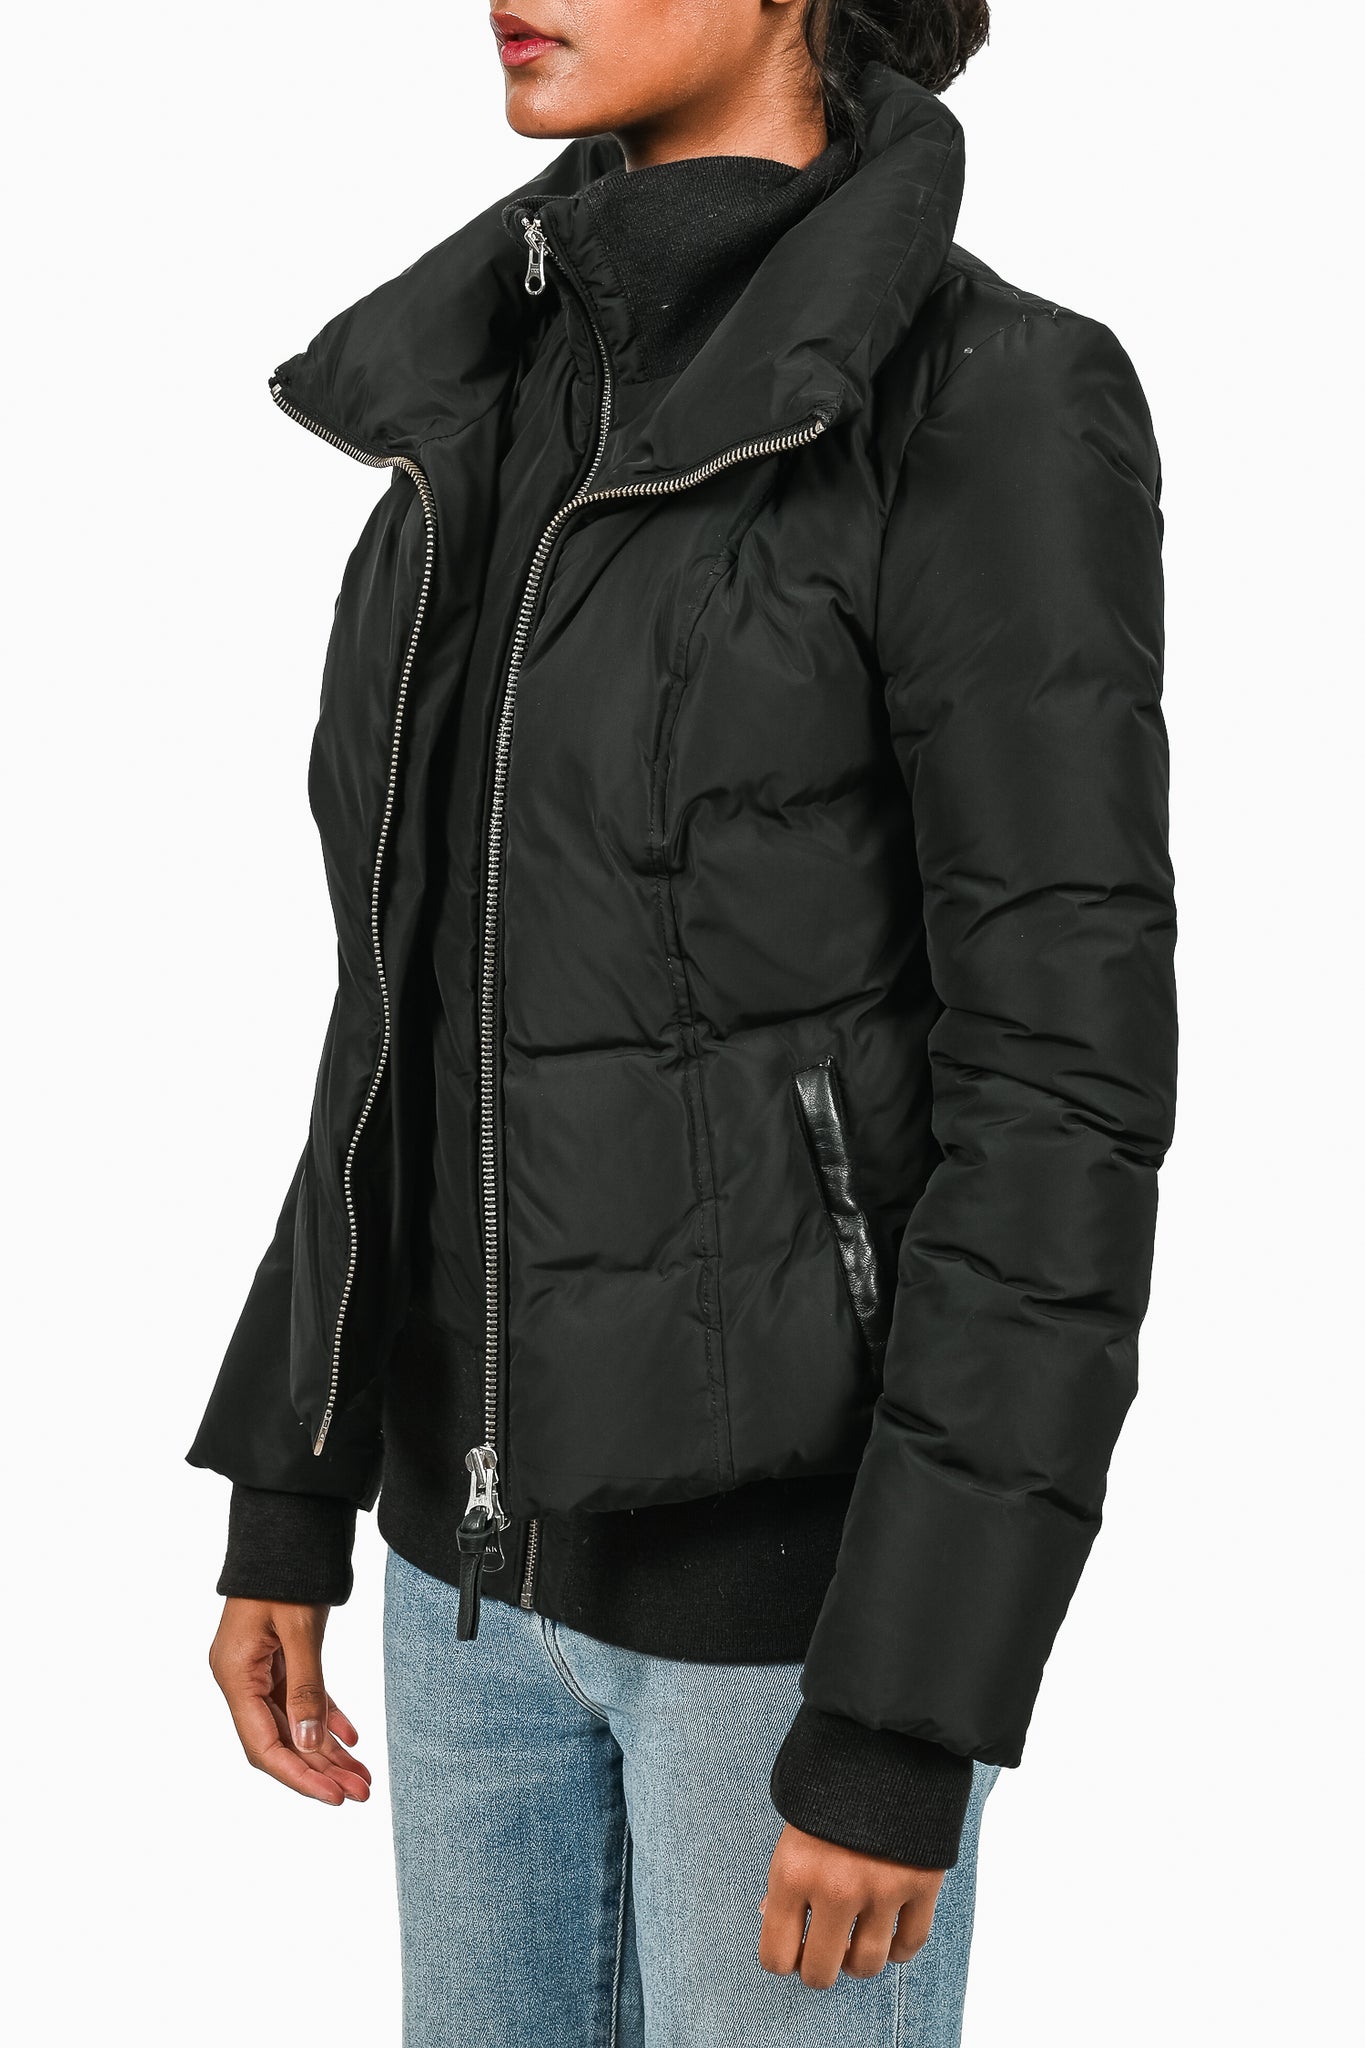 Mackage Black Double Zip Puffer With Hood Size XS